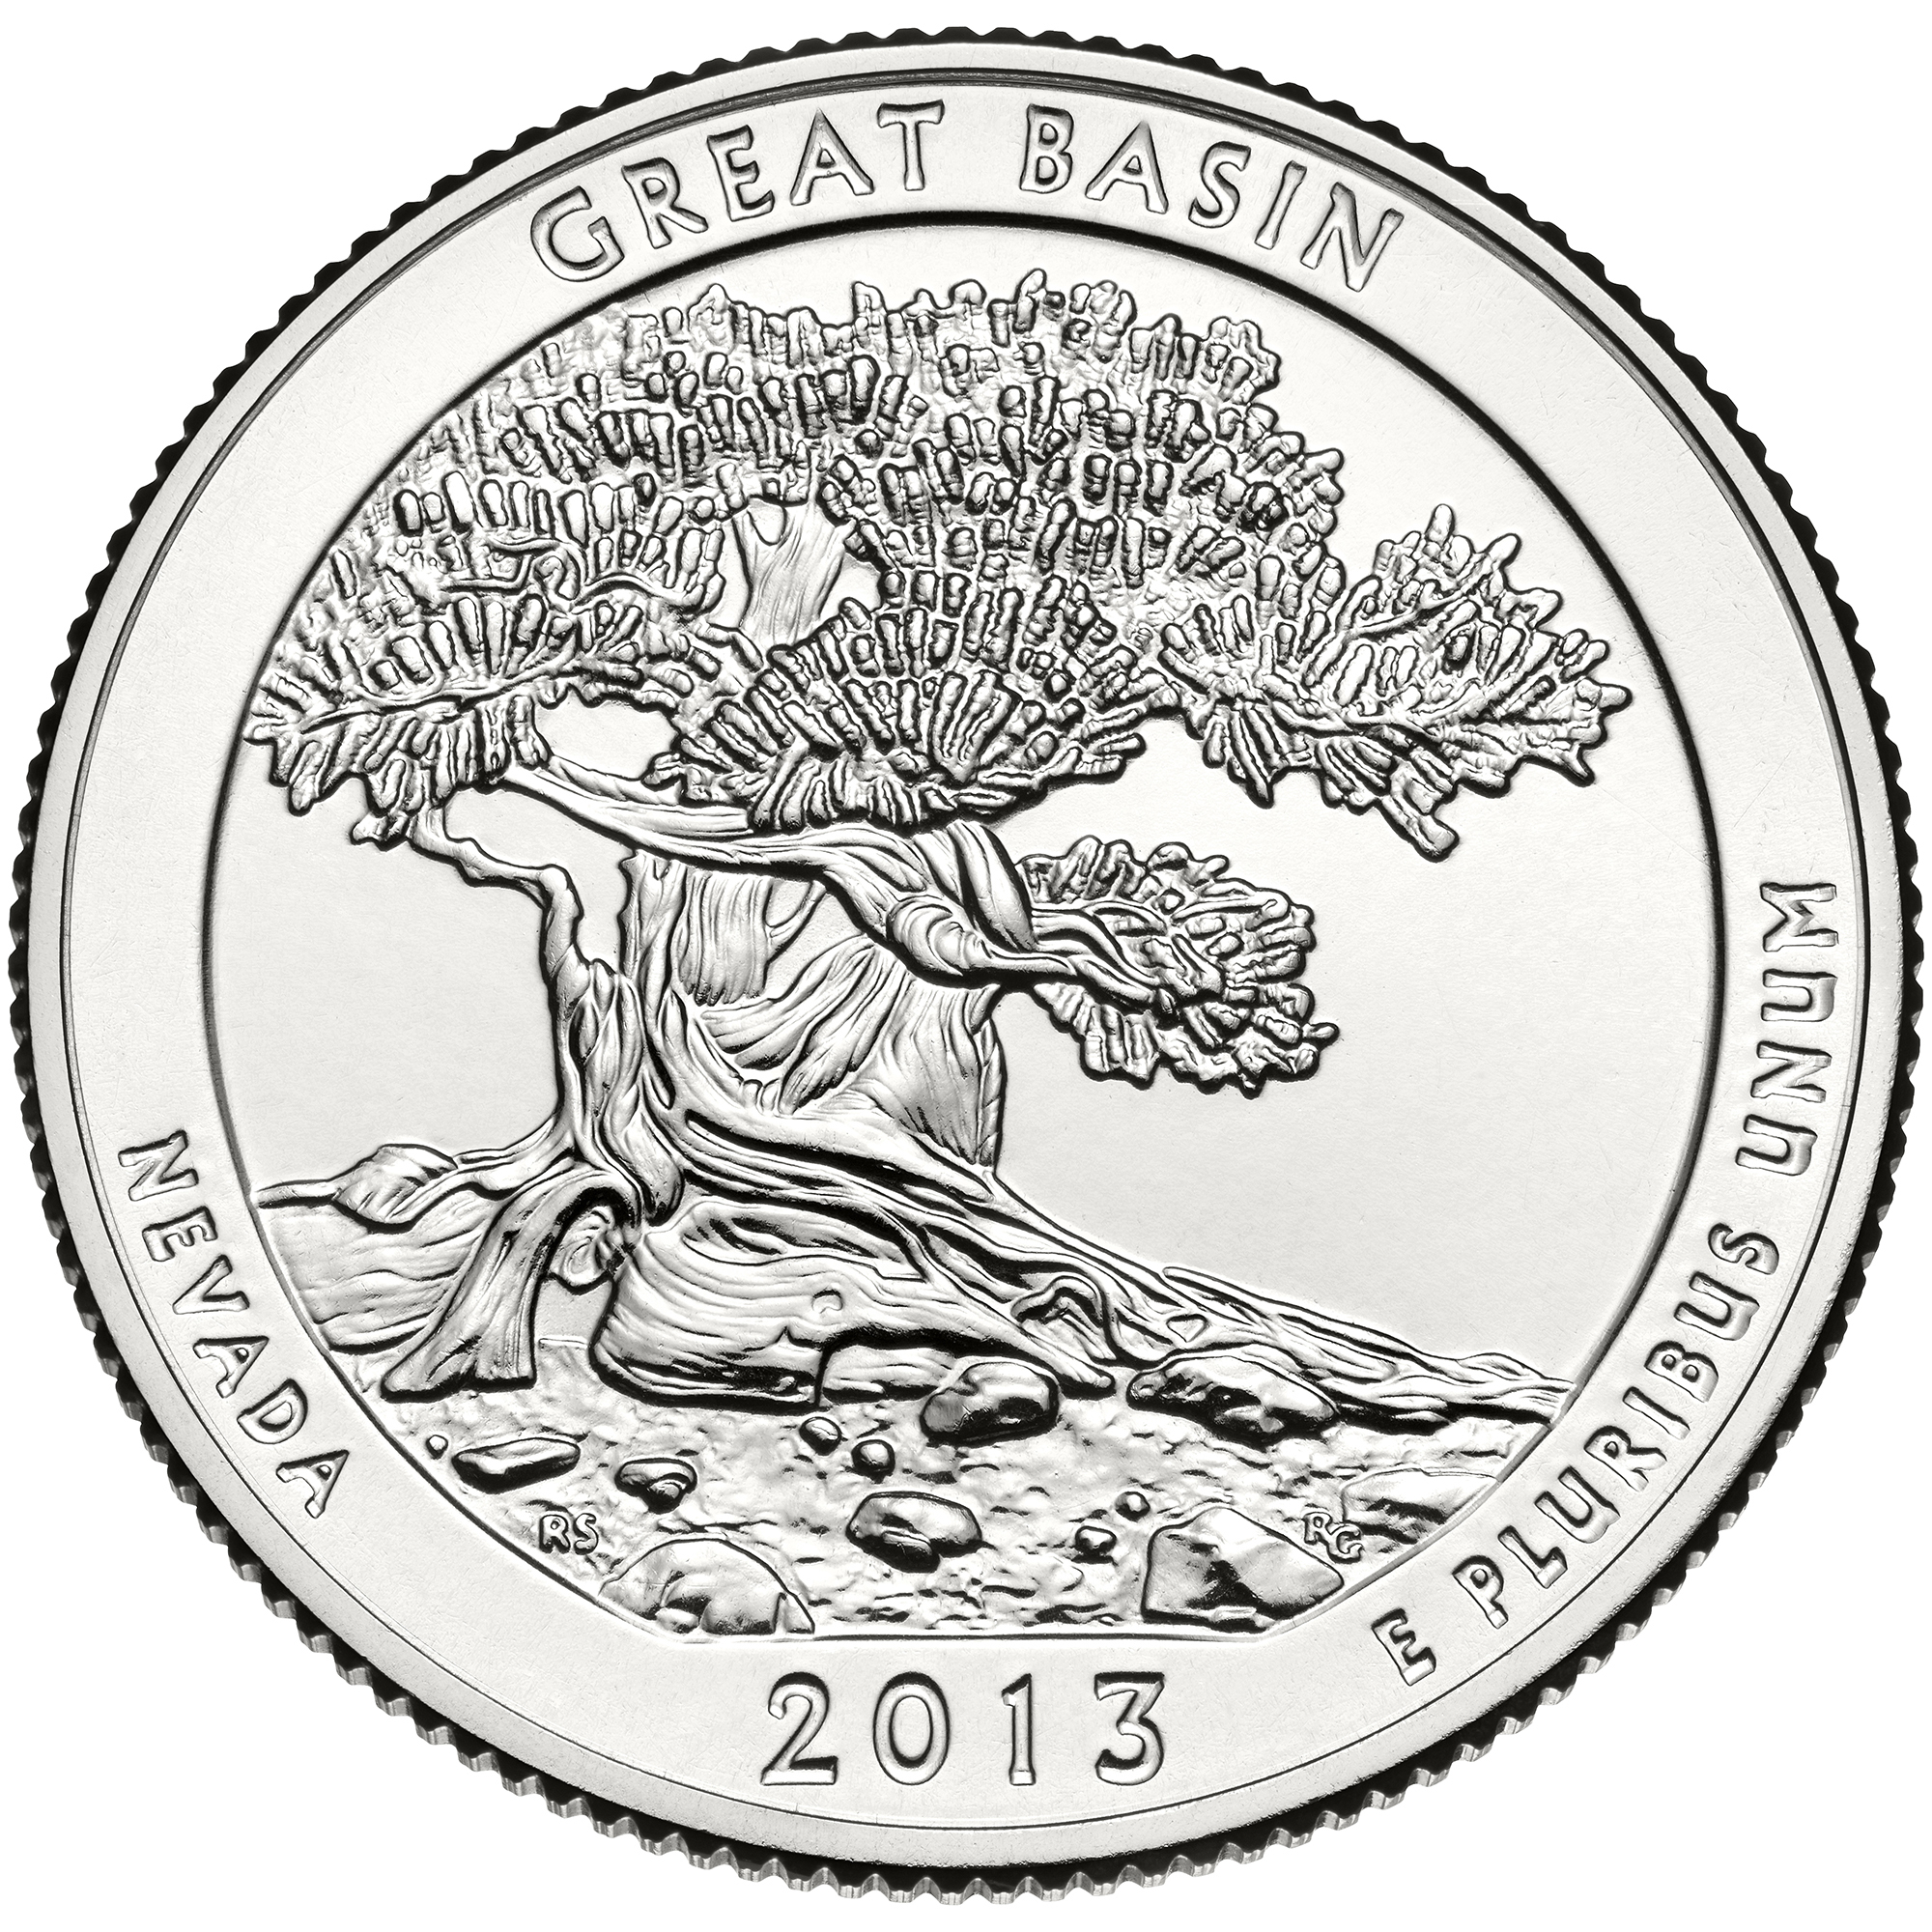 2013 America The Beautiful Quarters Coin Great Basin Nevada Uncirculated Reverse